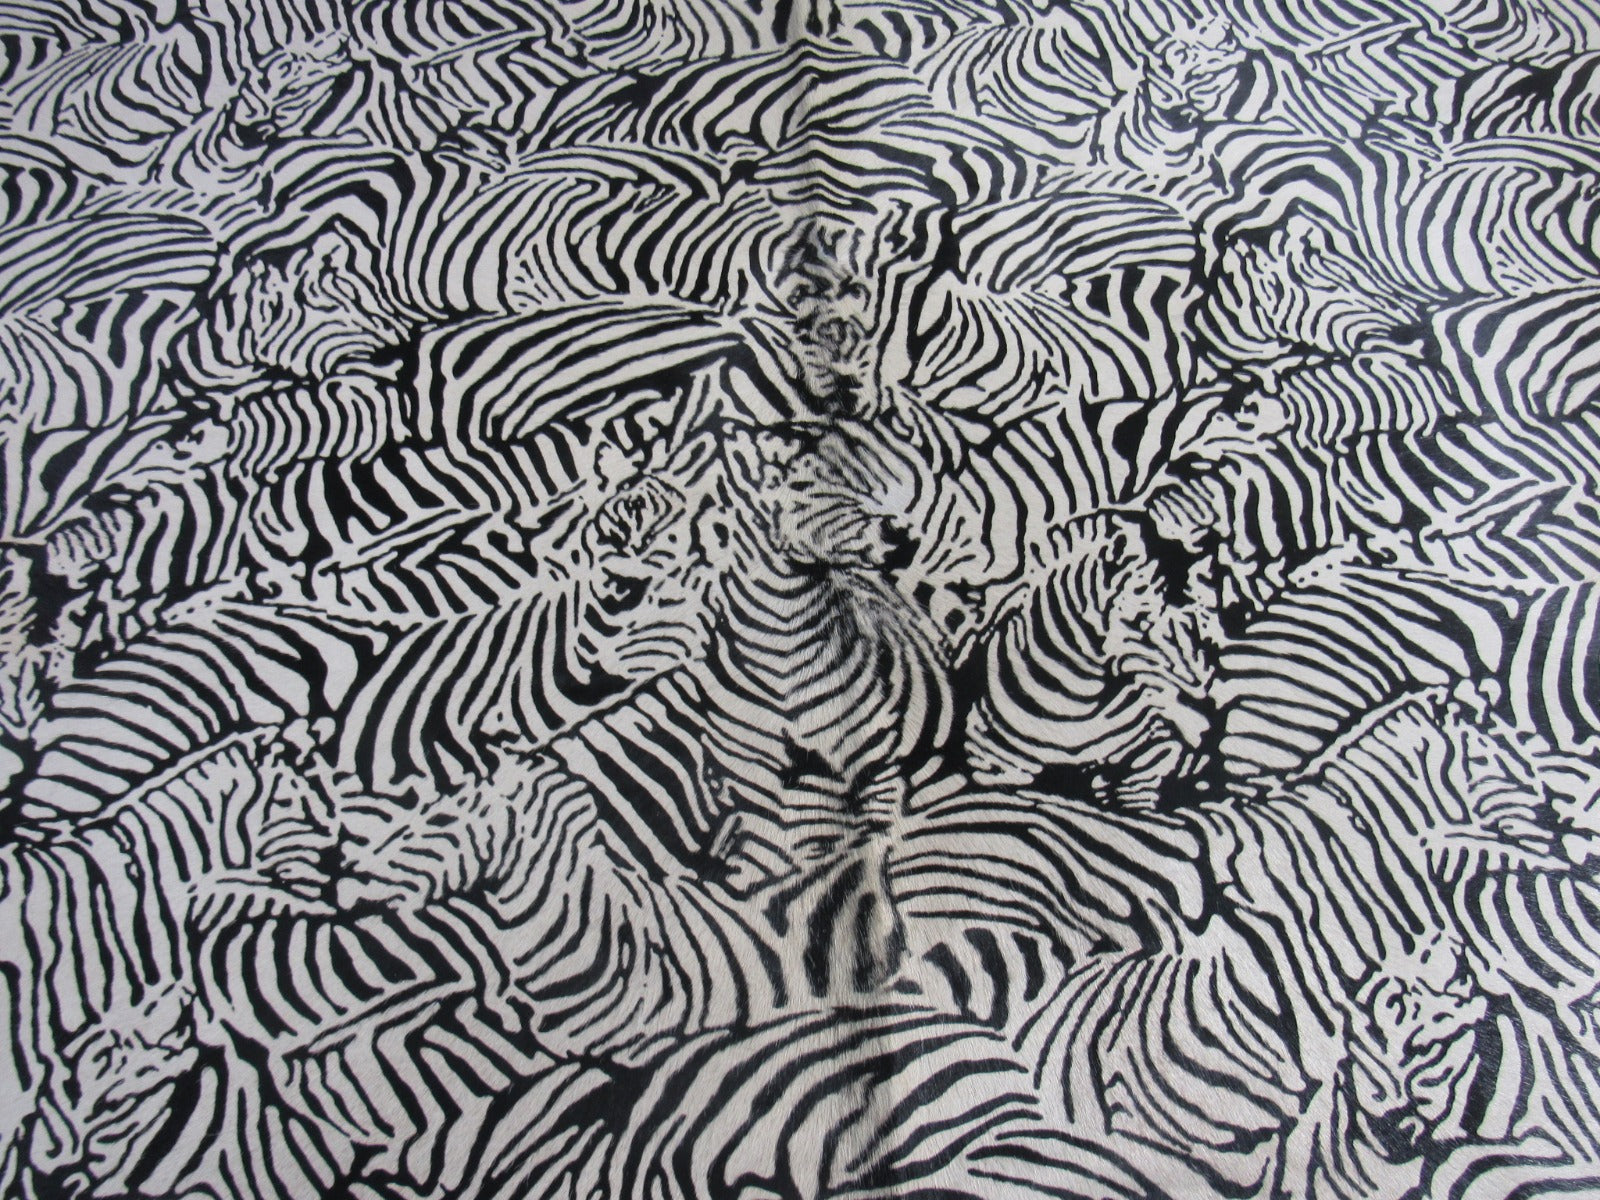 Zebra Pattern Printed Cowhide Rug (dorsal line is a bit blurry) Size: 7x5.5 feet M-1129